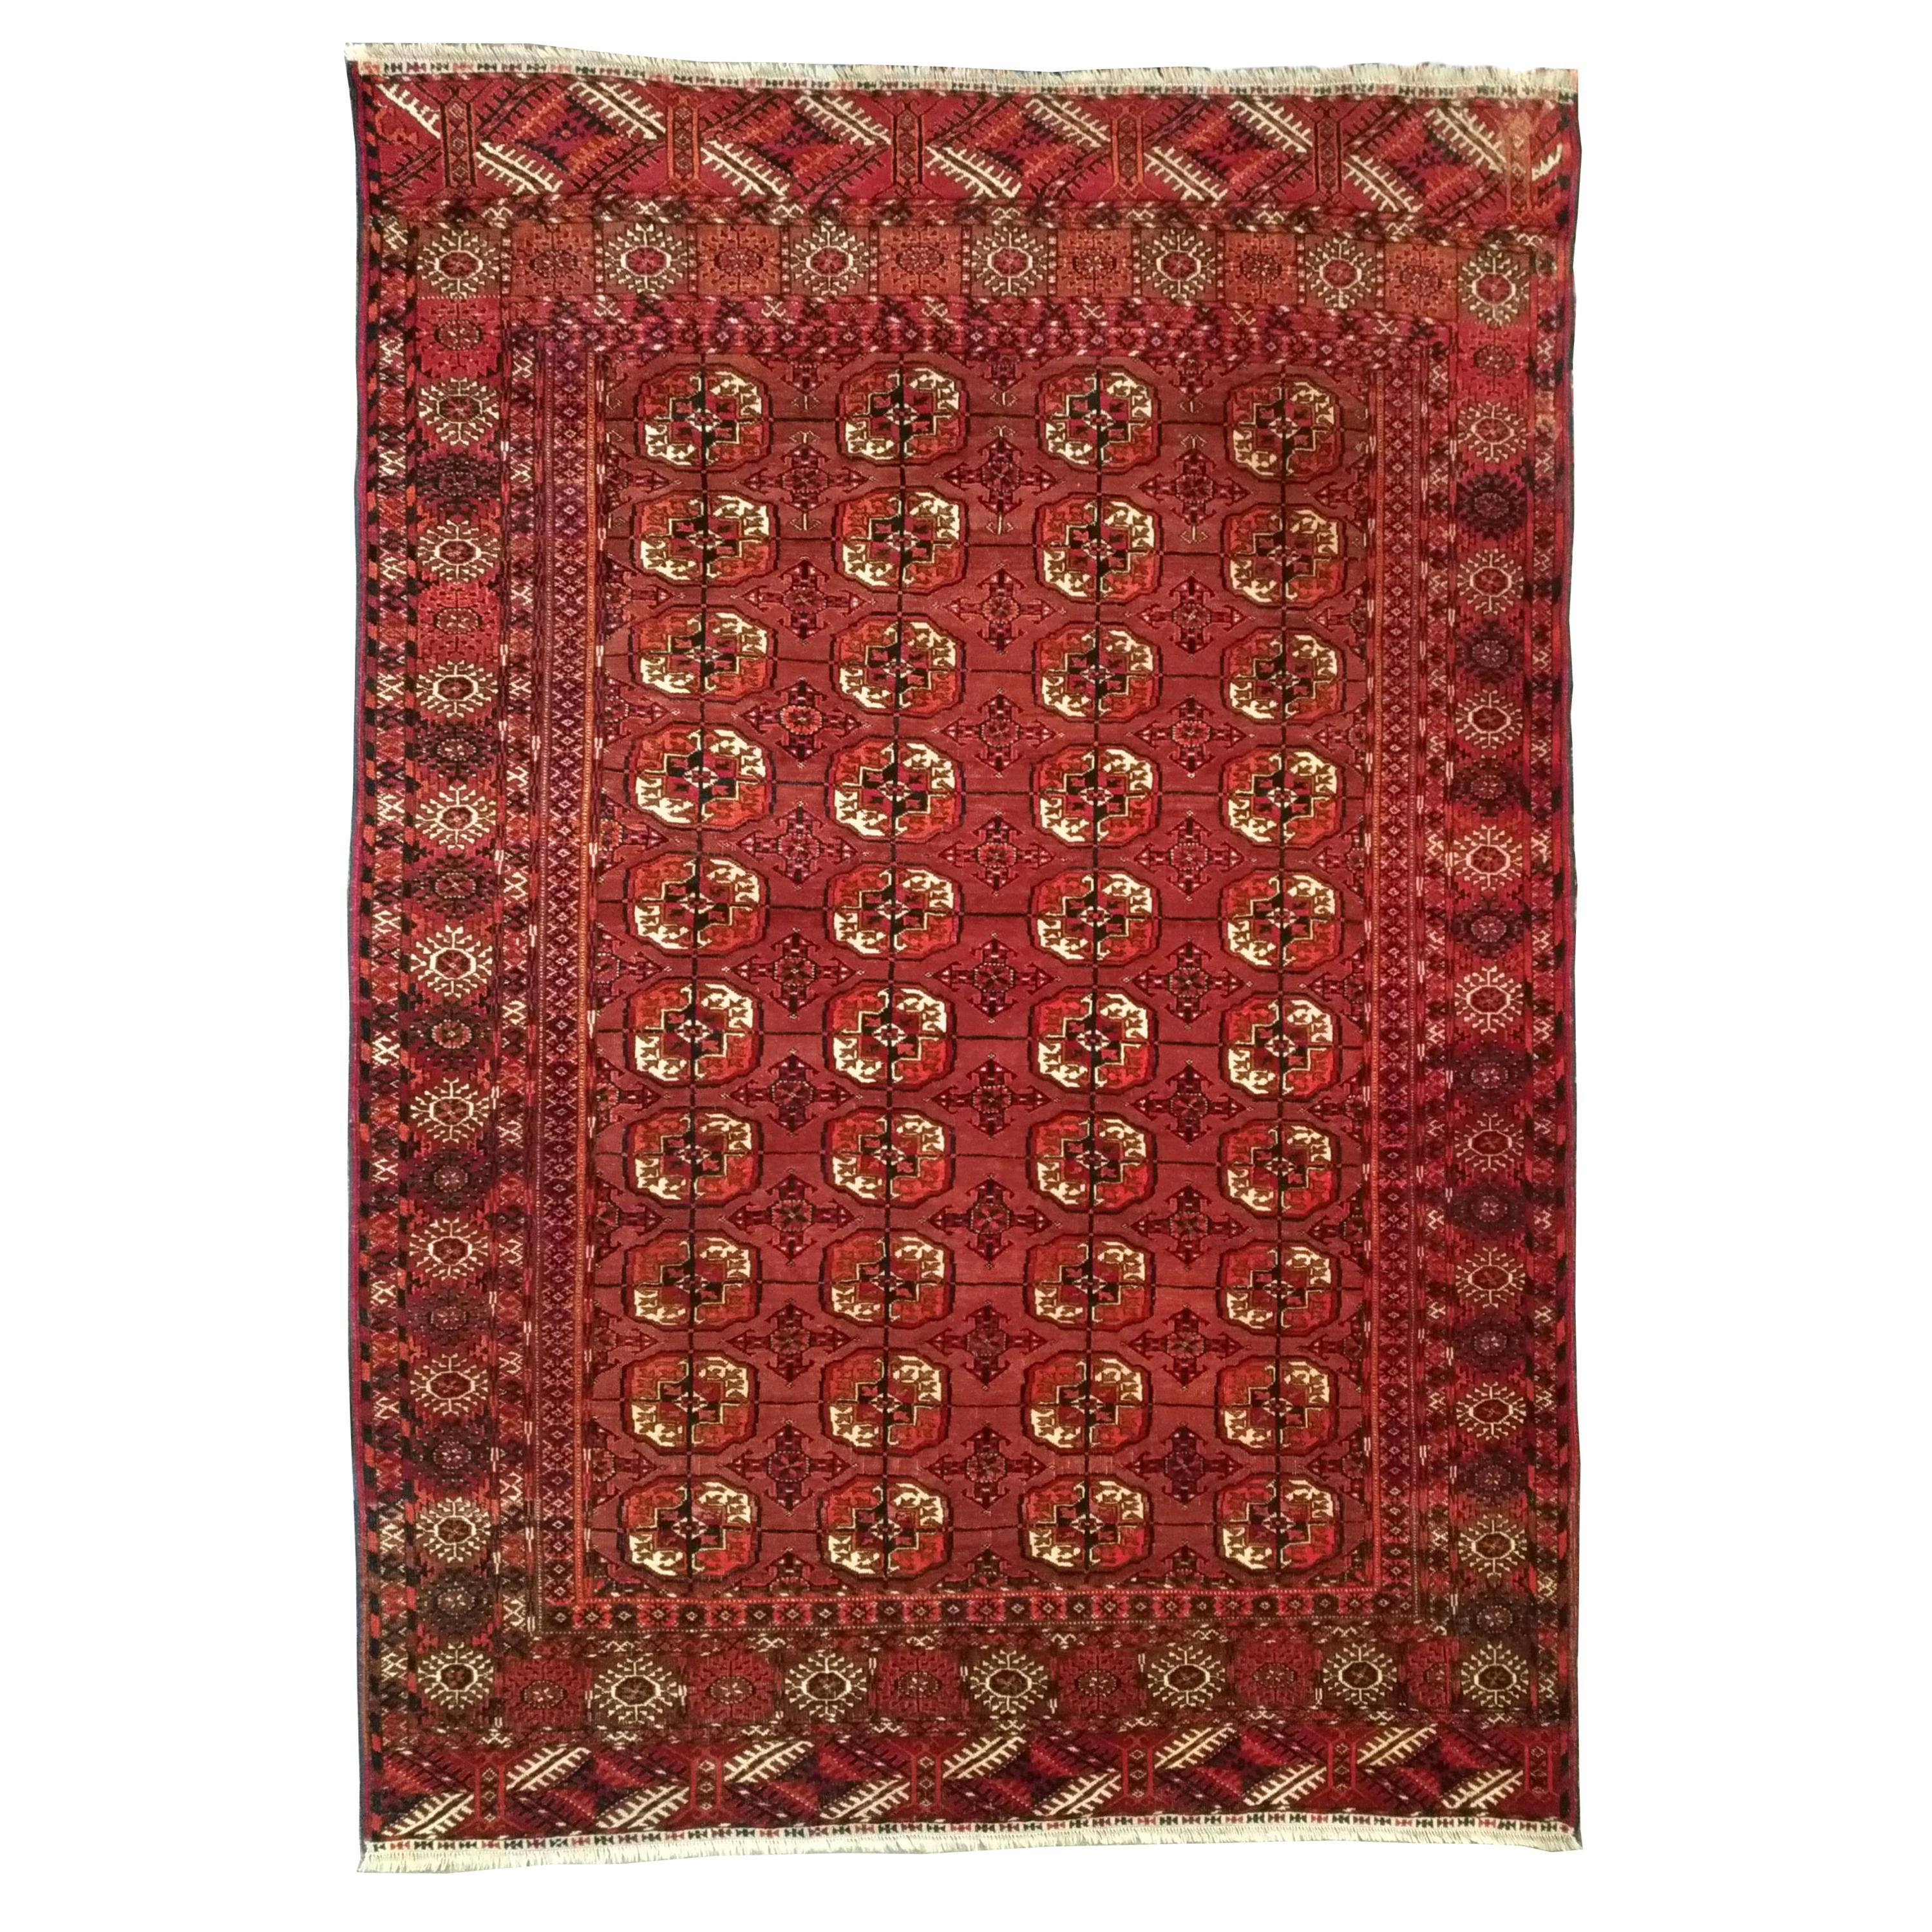 989 -19th Century Boukara Carpet For Sale